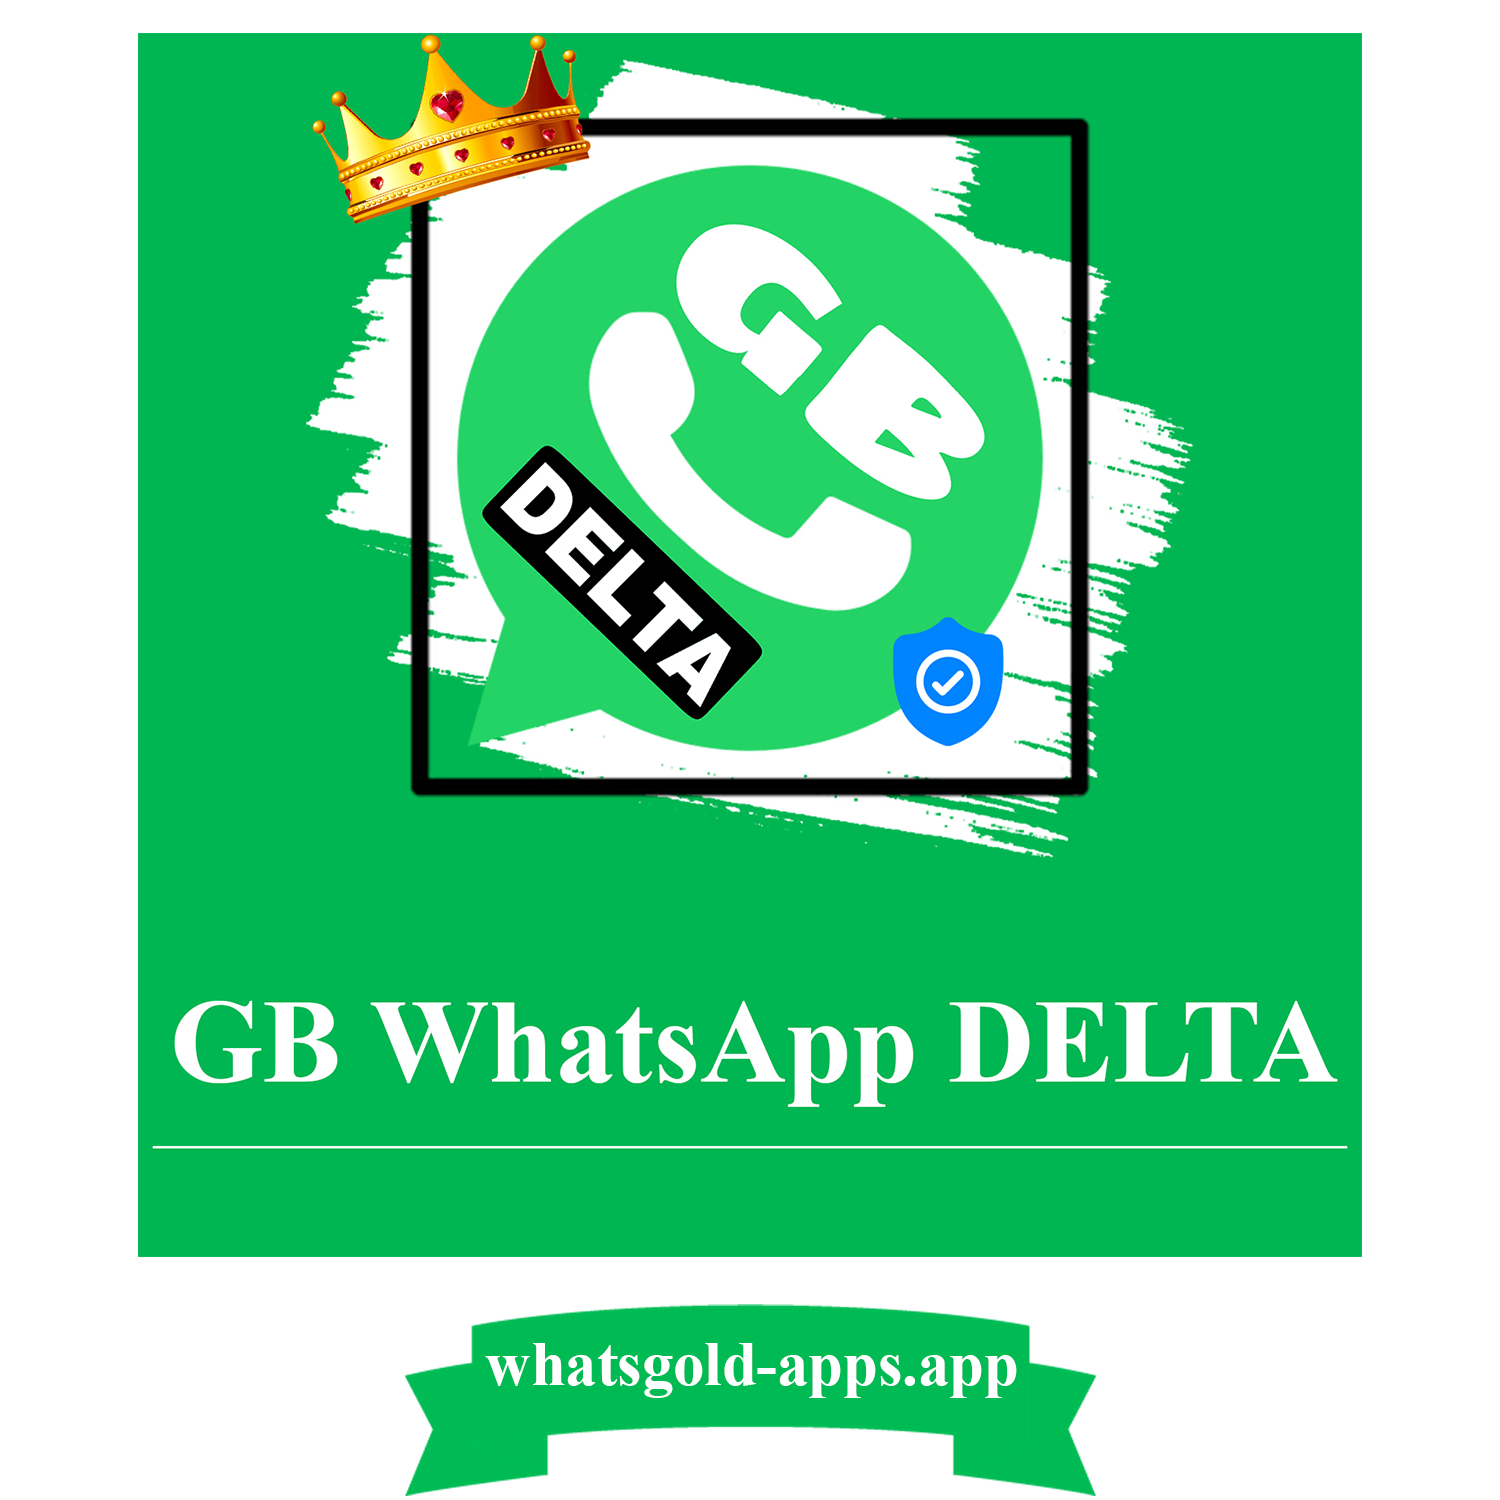 GB WhatsApp DELTA